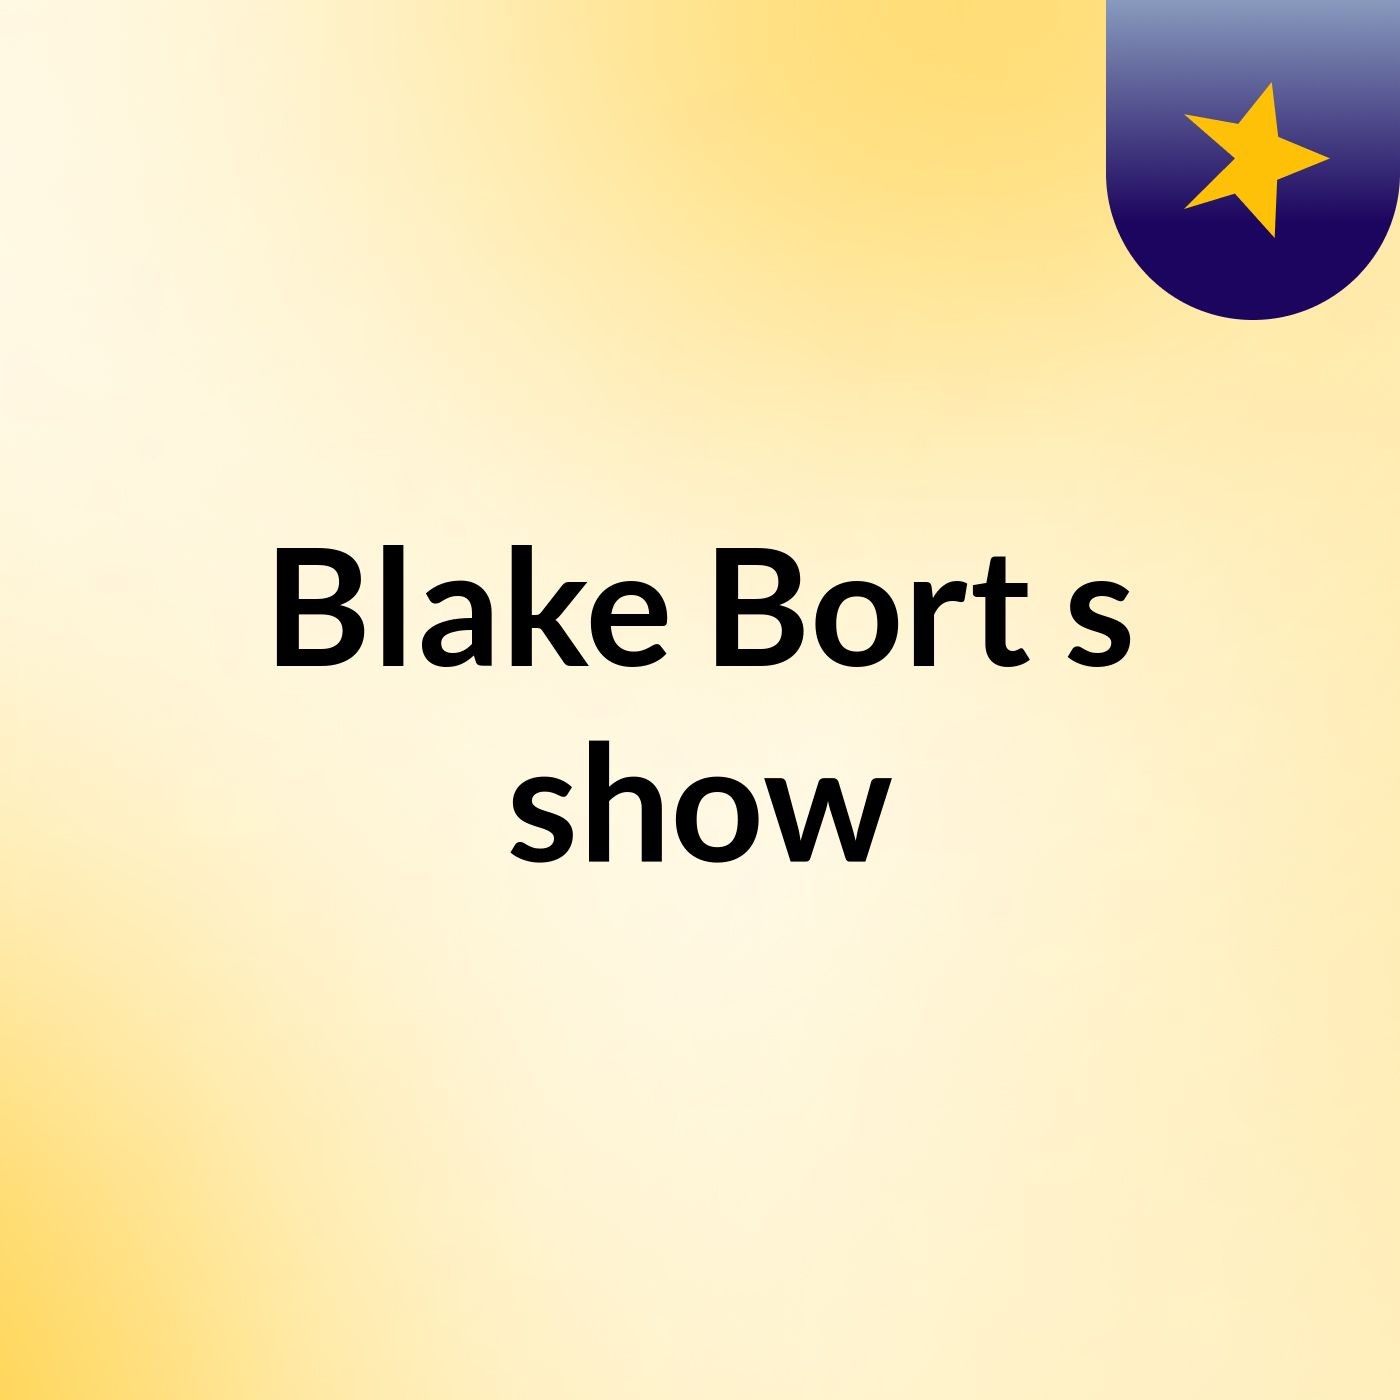 Episode 2 - Blake Bort's show